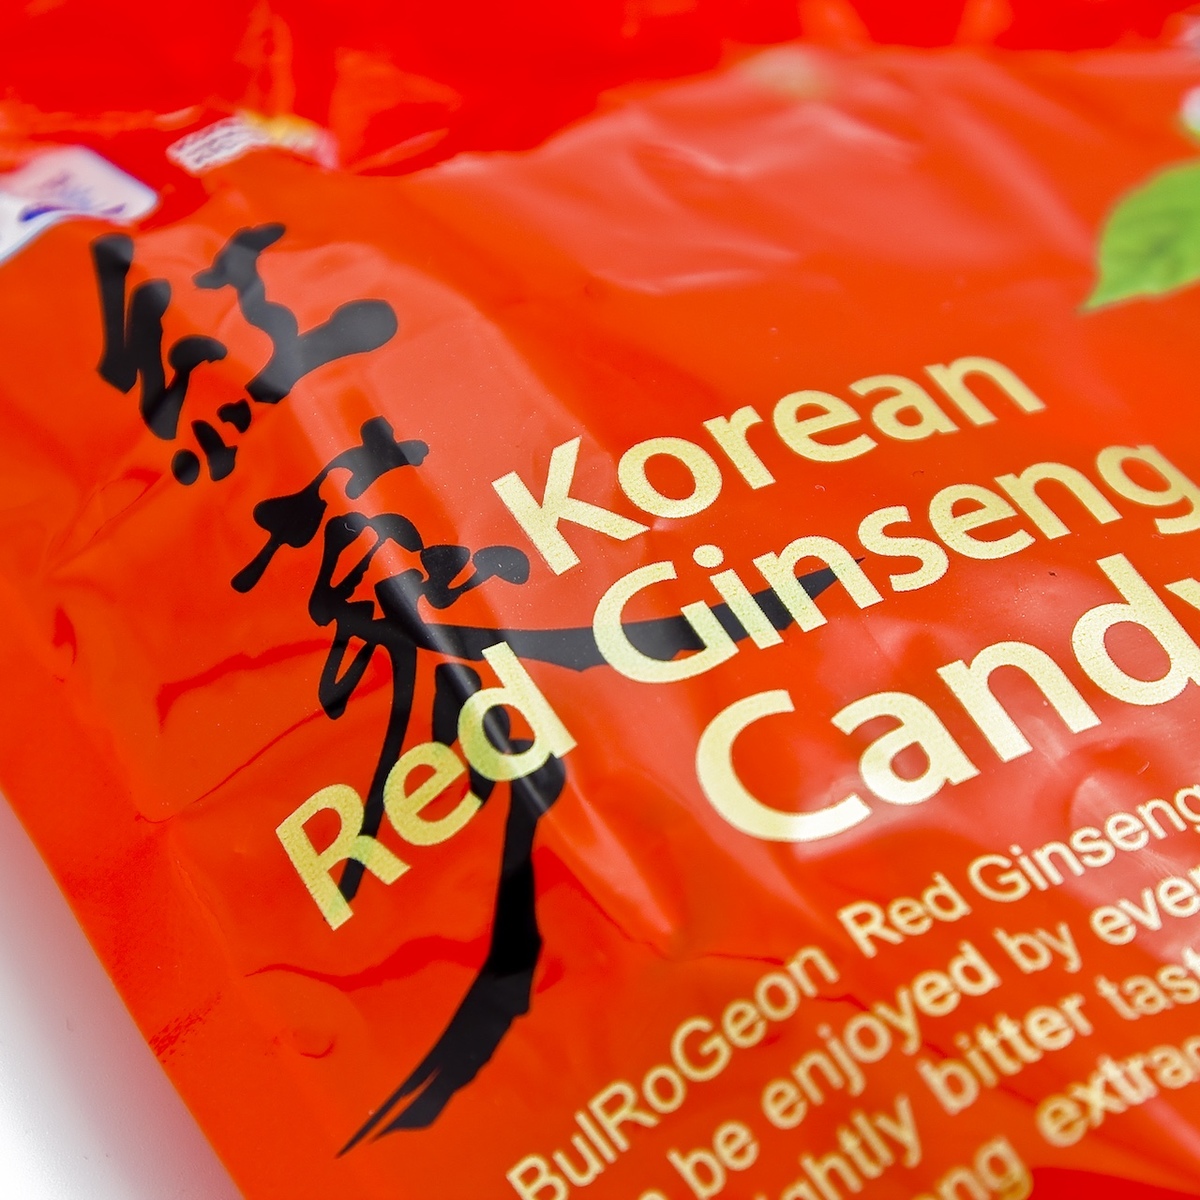 Combo 3 gói Kẹo Hồng Sâm 250gram Daedong Korea Ginseng